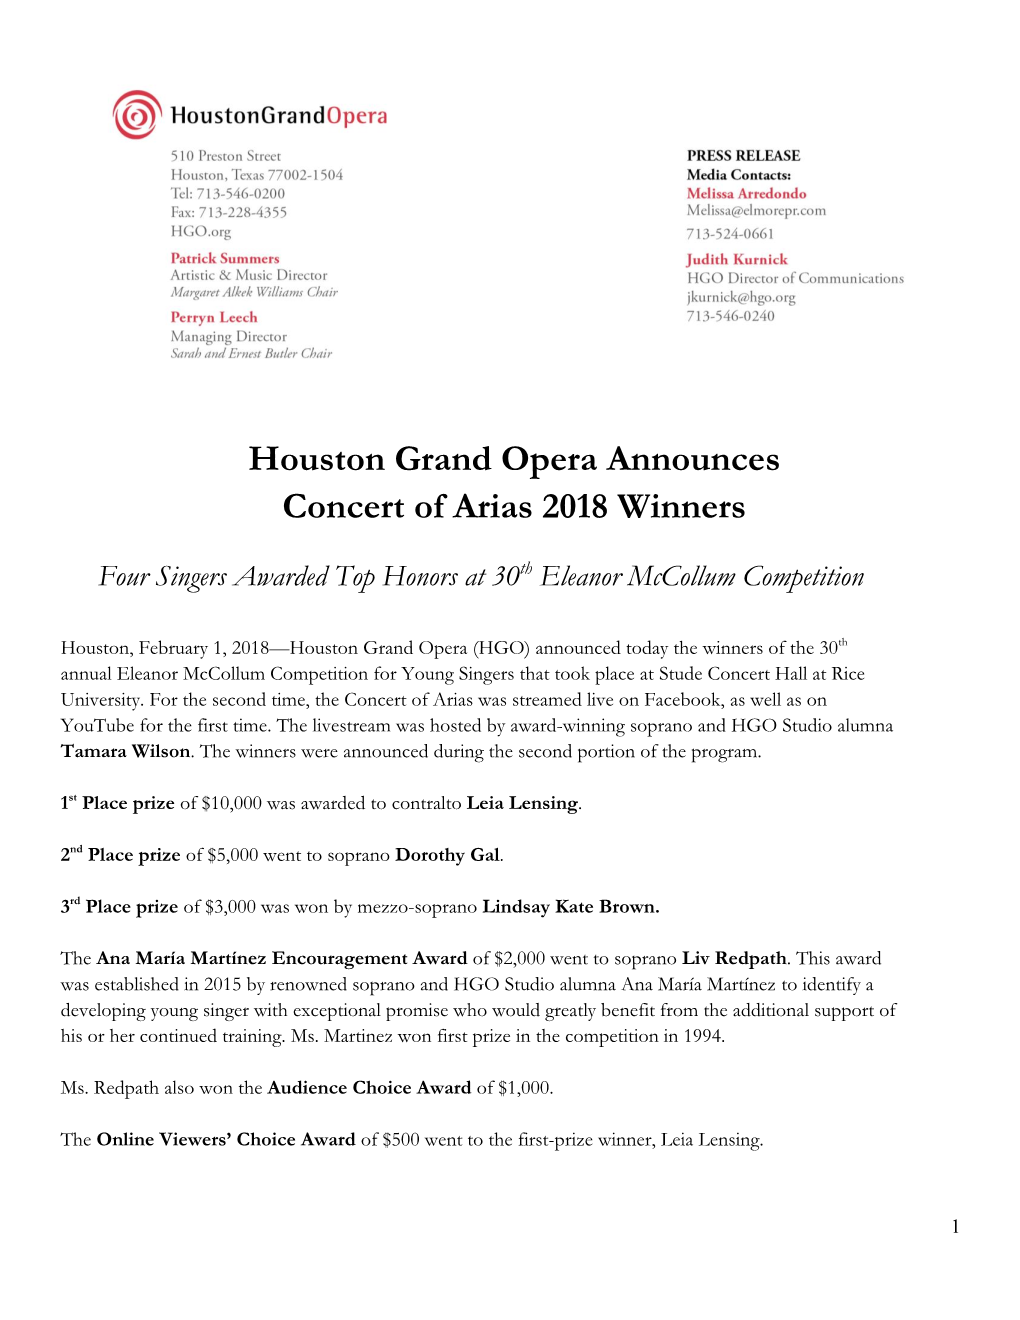 Houston Grand Opera Announces Concert of Arias 2018 Winners